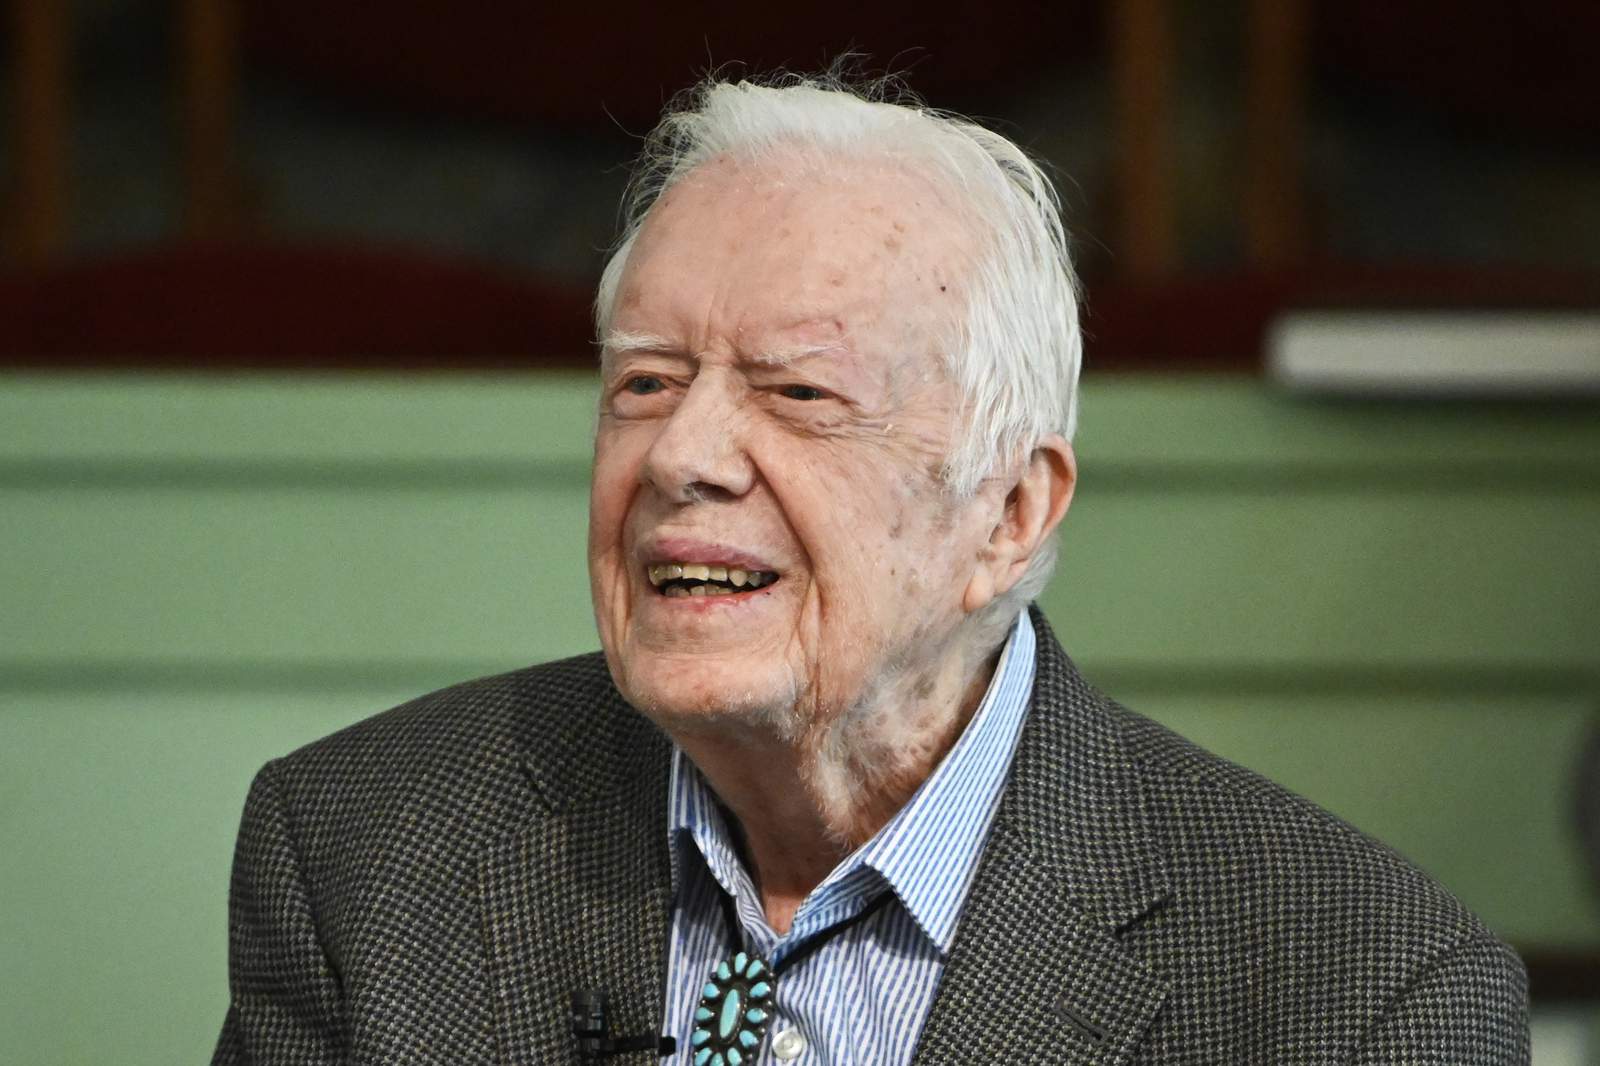 Jimmy Carter says he’s sad, angry over Georgia voting bills